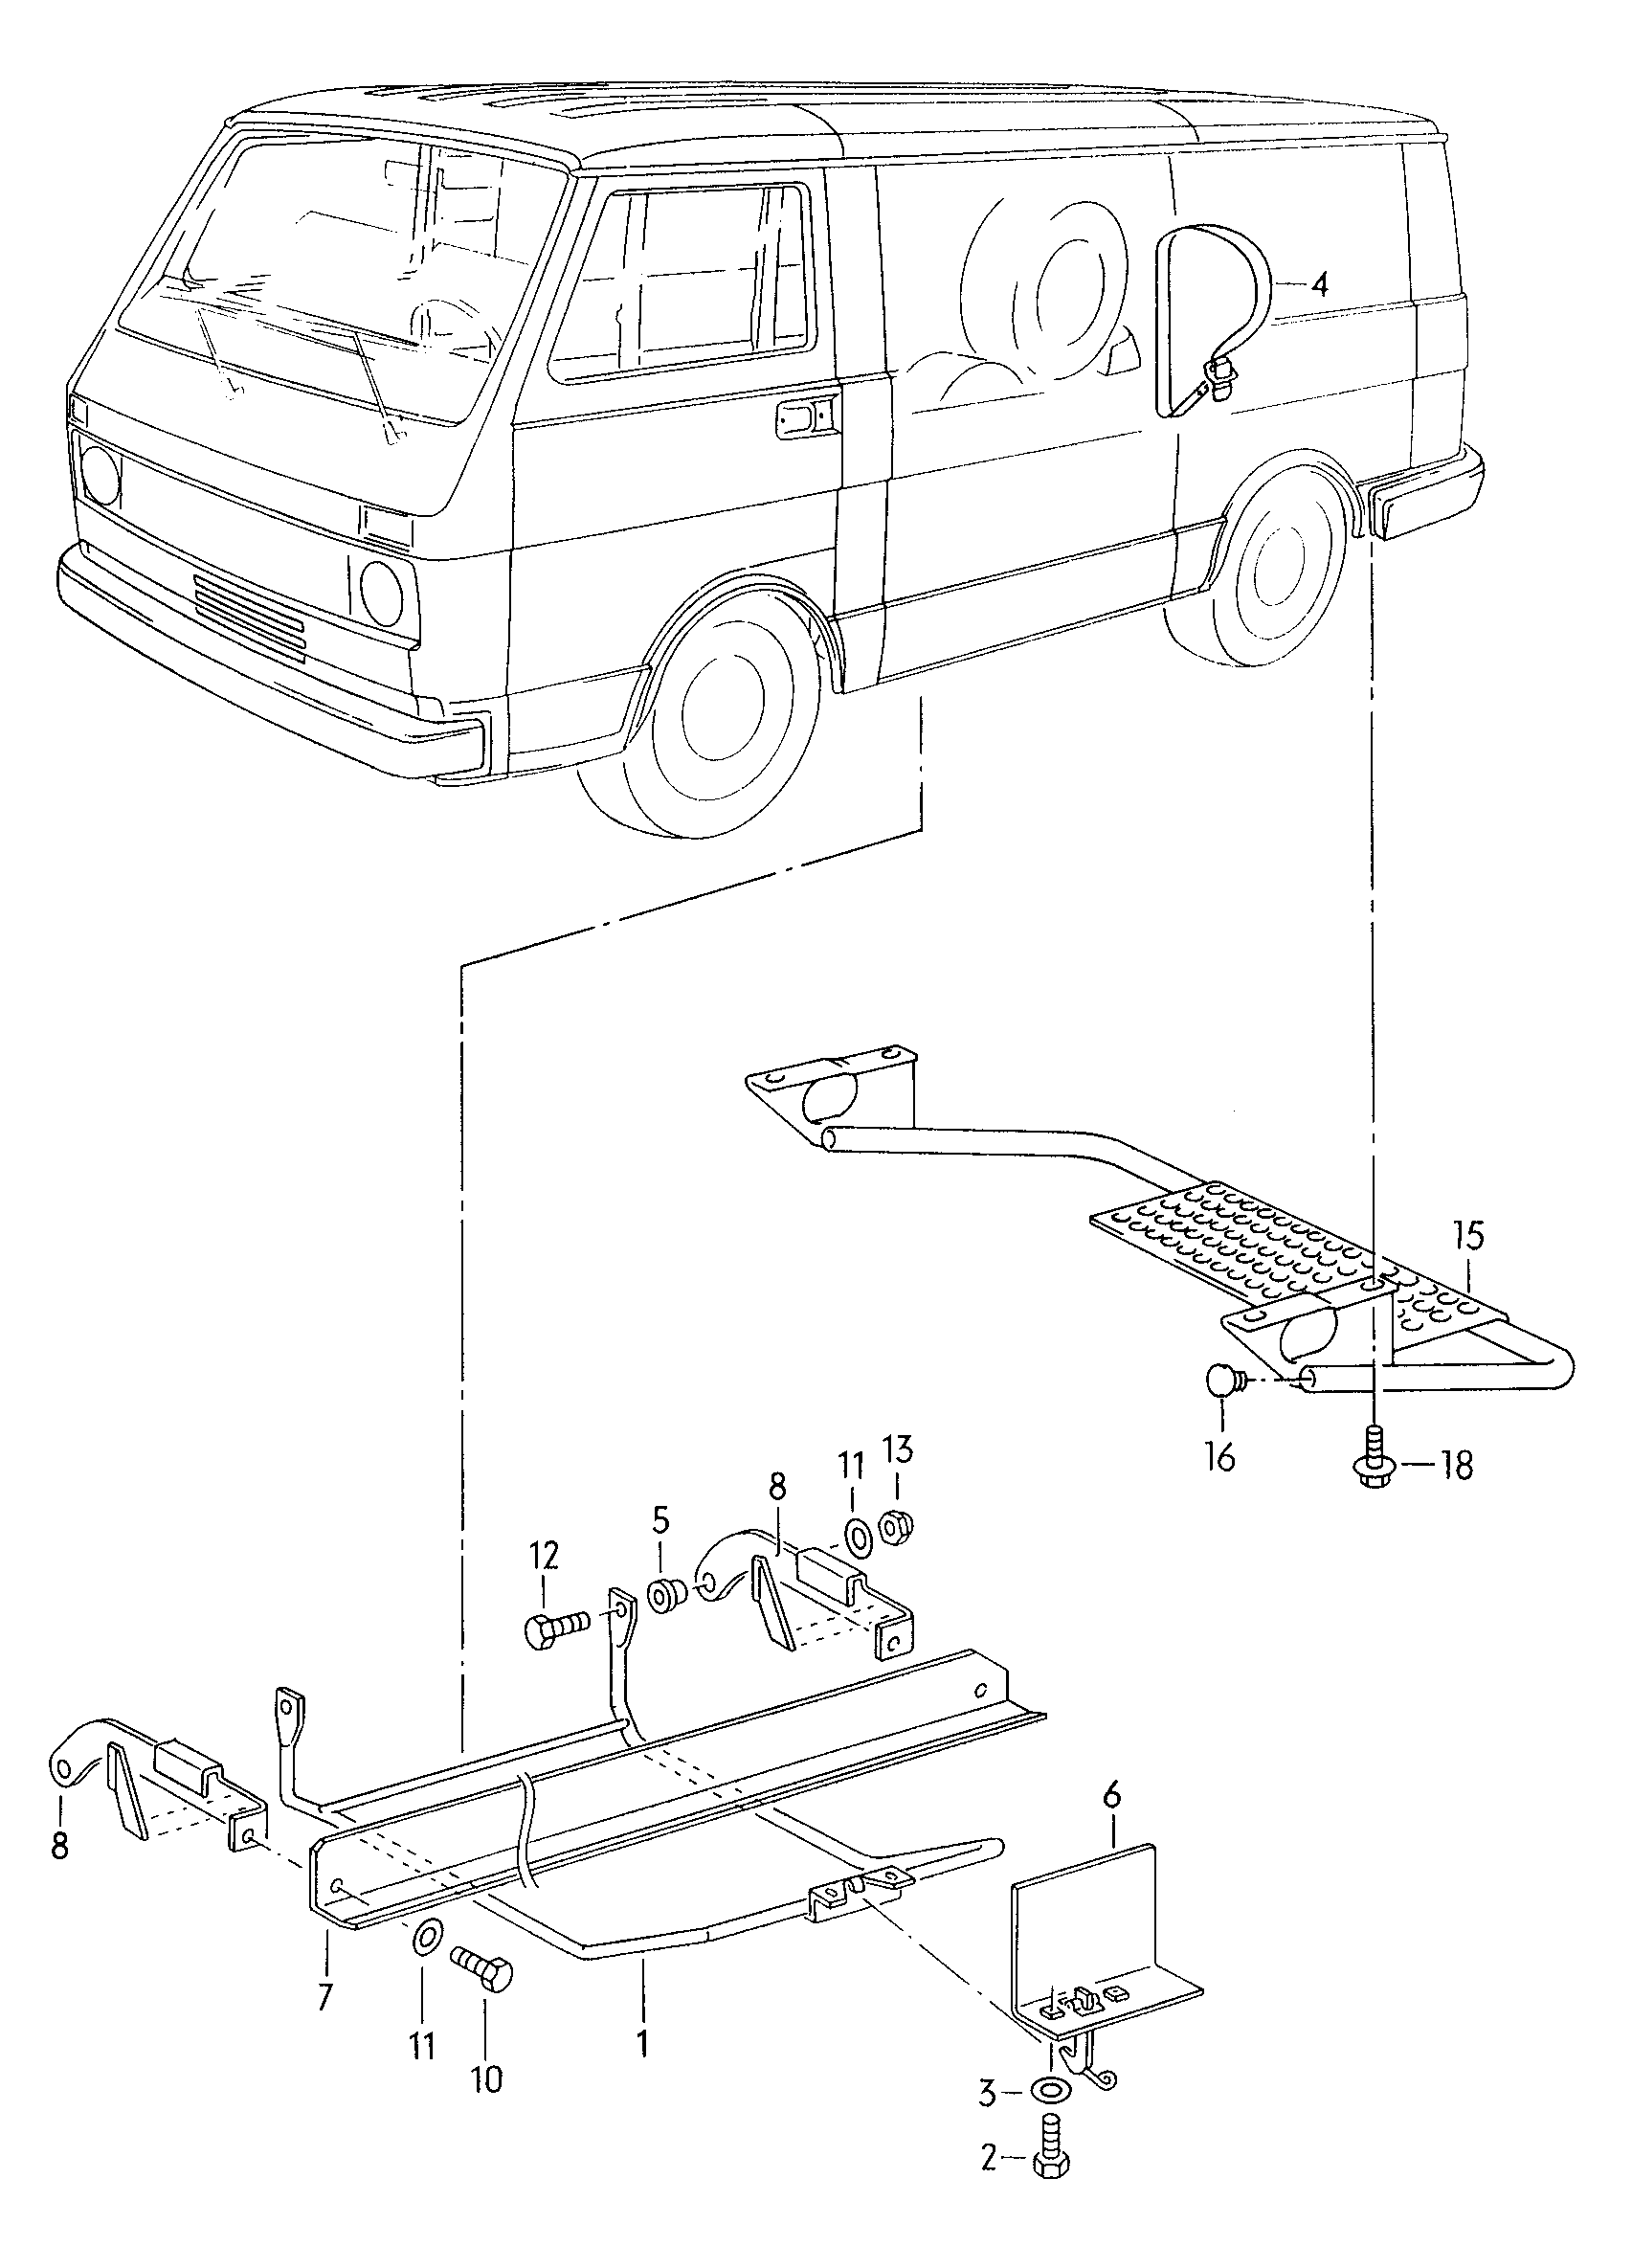 Reserveradbefestigung KastenwagenKombiwagen - LT, LT 4x4 - lt